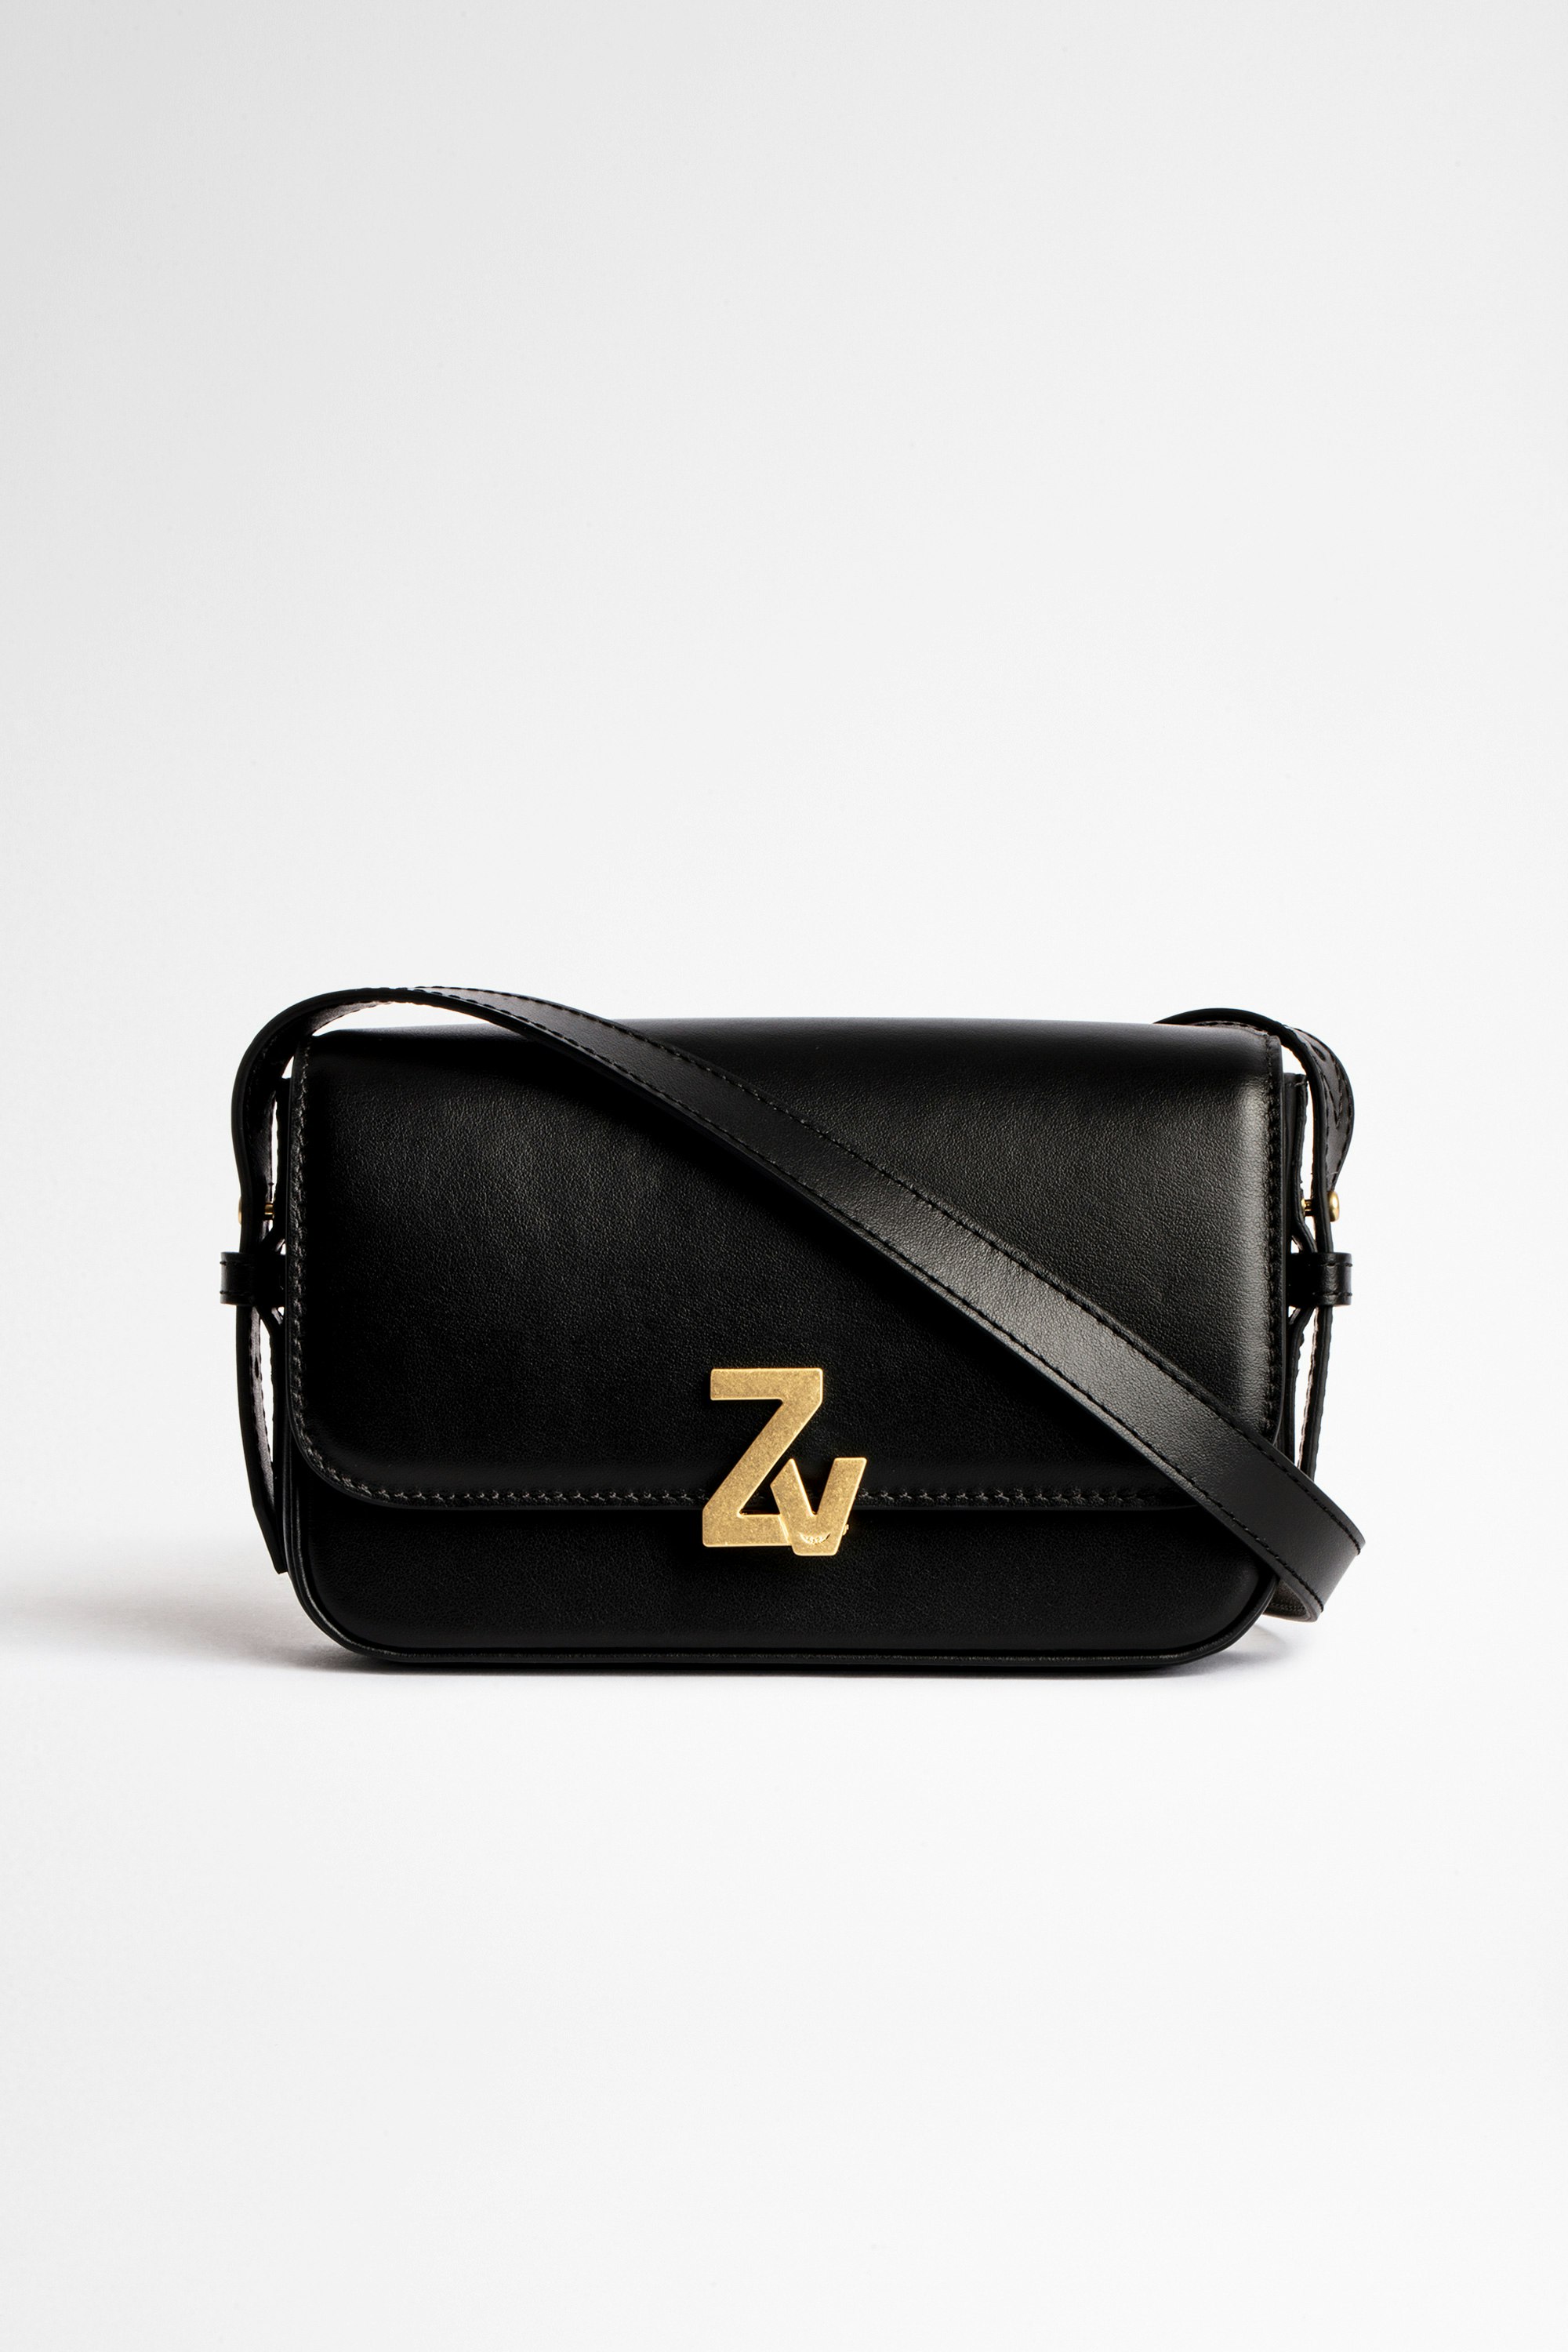 Le Mini ZV Initiale Bag Women's Le Mini bag in smooth black leather